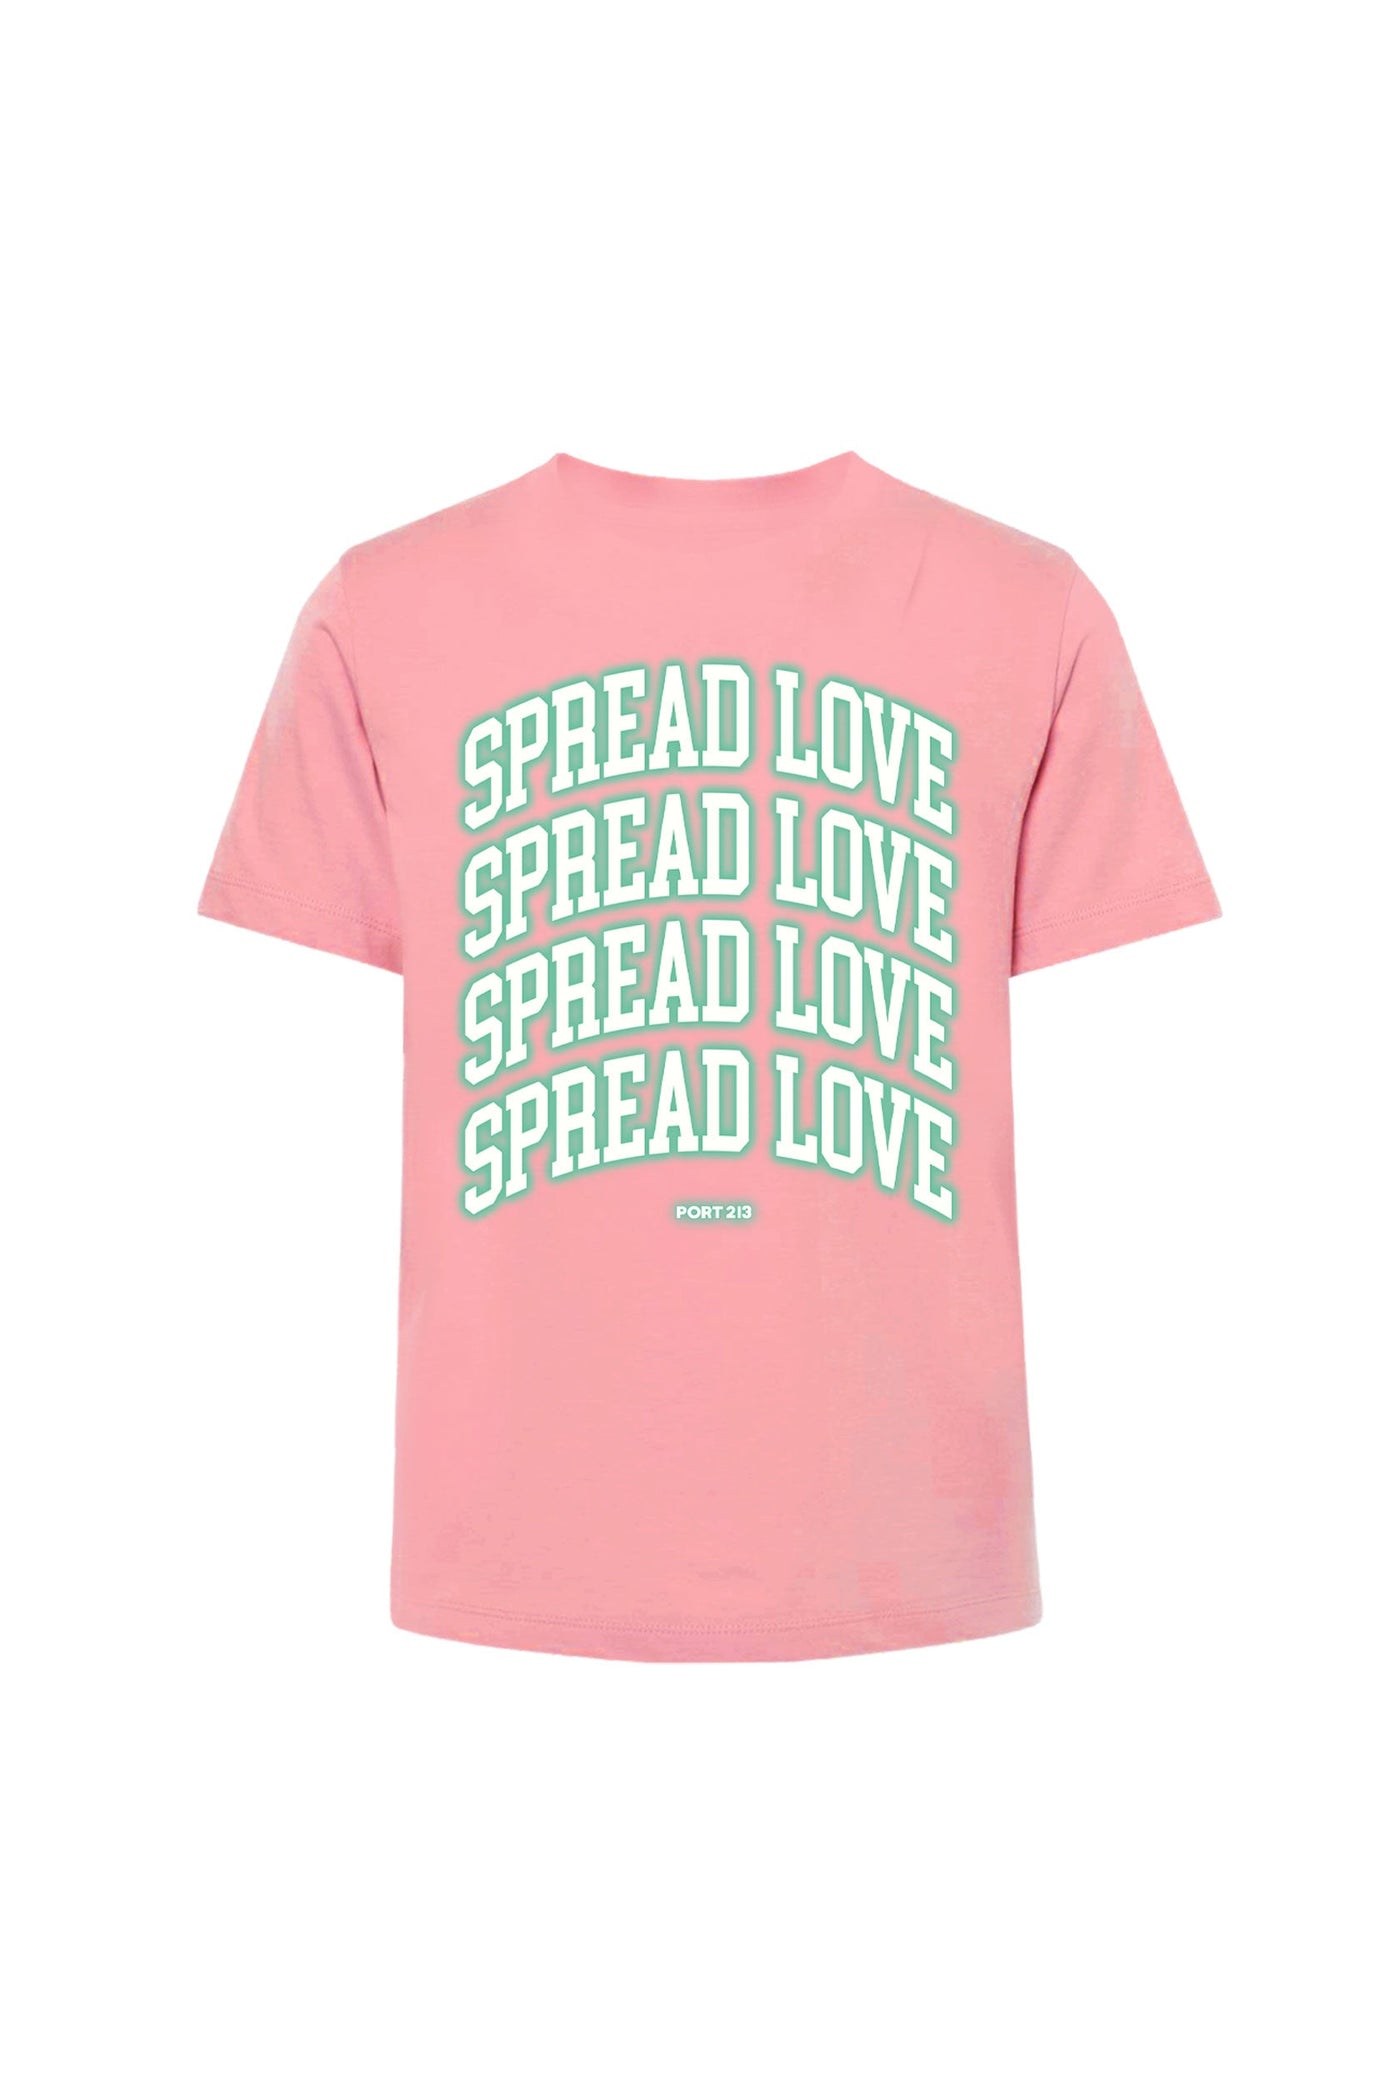 Spread Love T-shirt, Girls